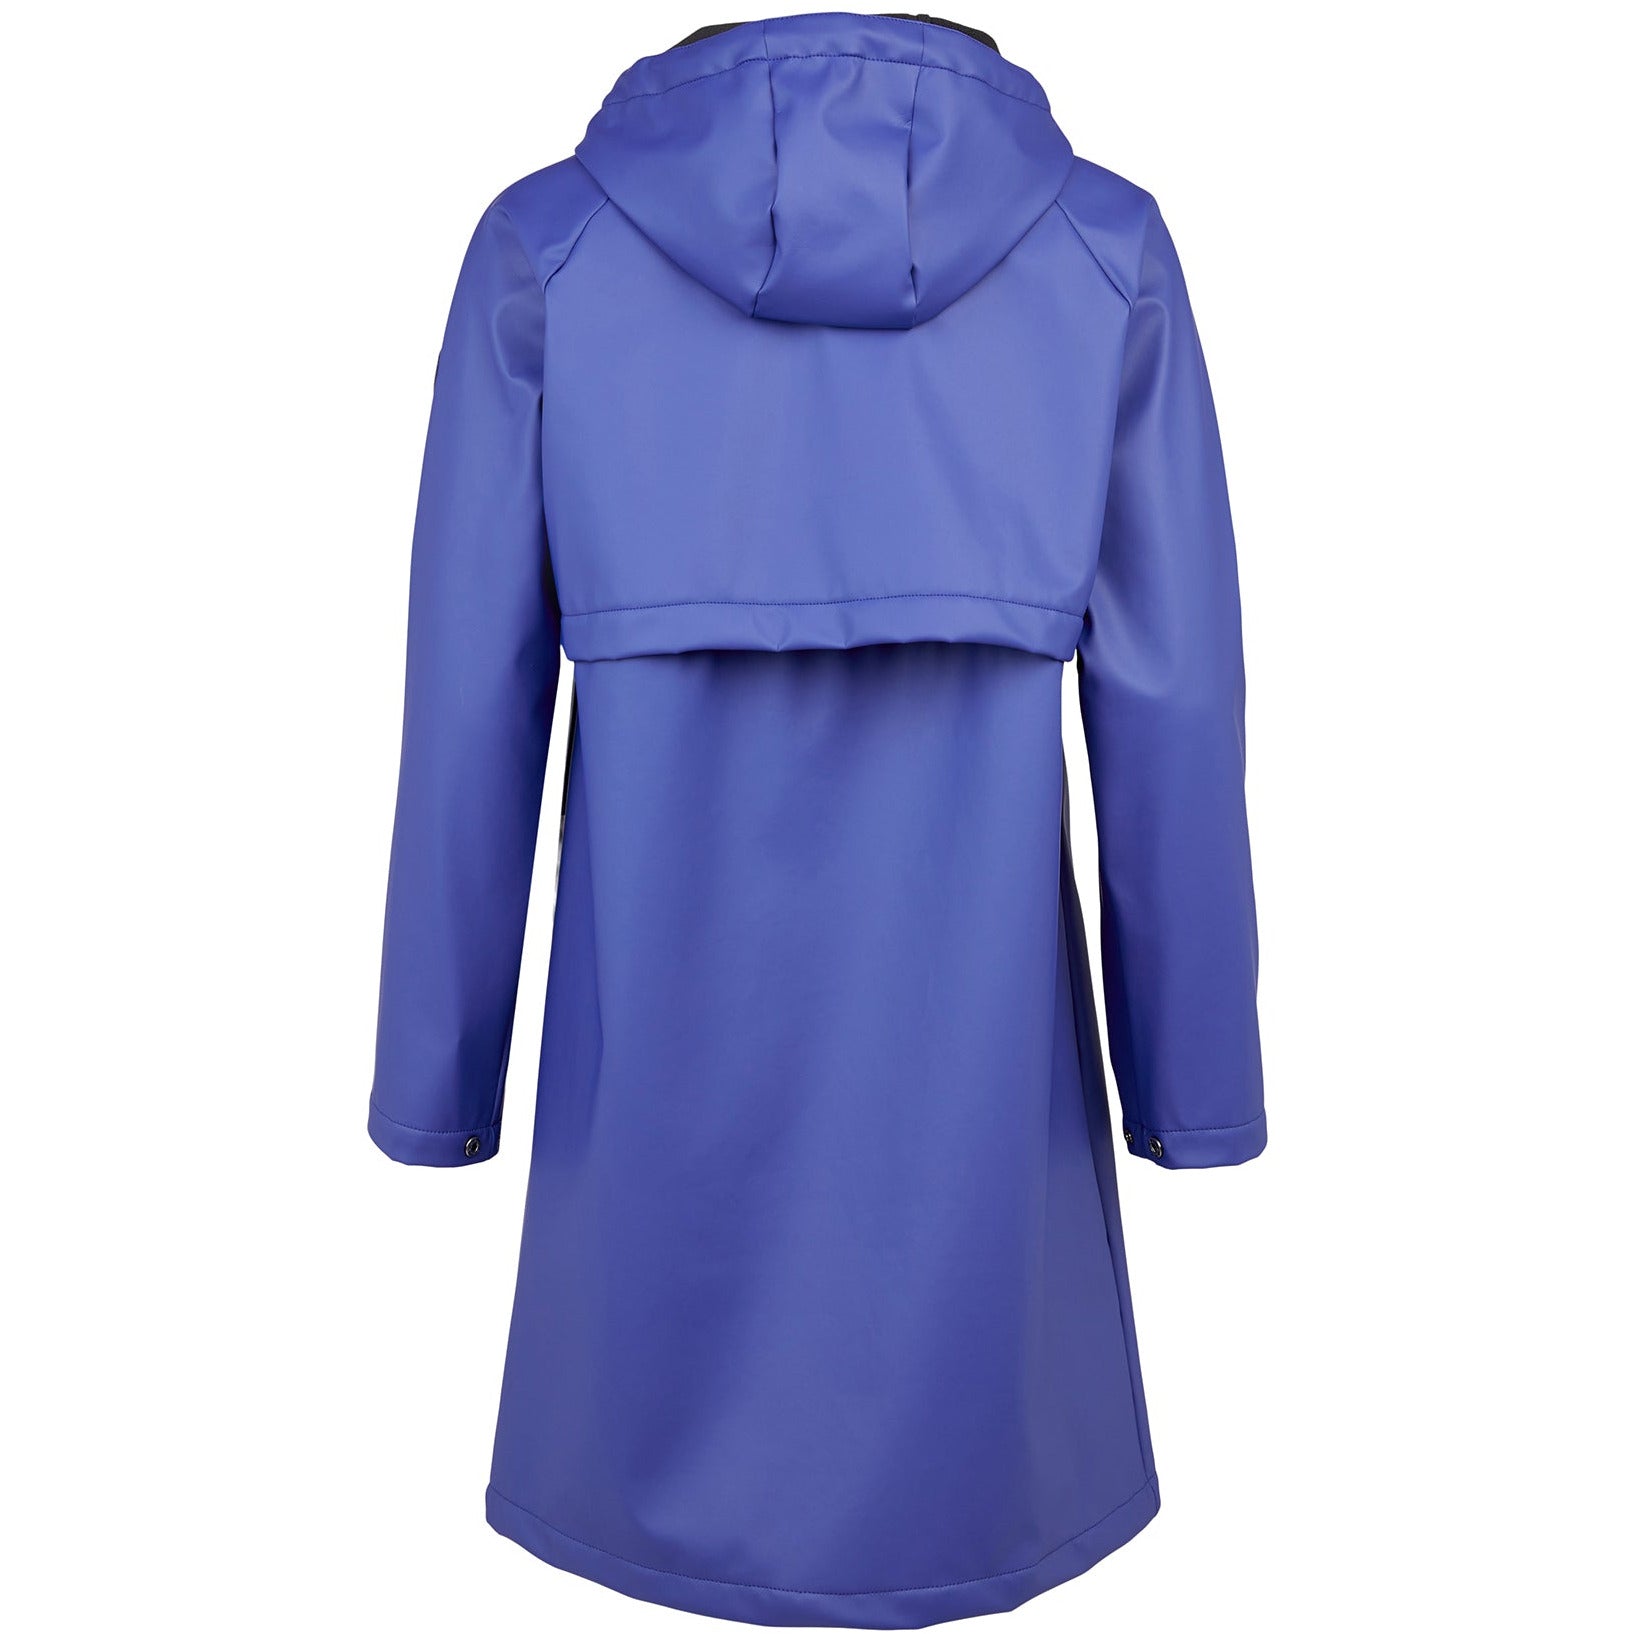 Frandsen Lined Raincoat in Royal Blue - Wardrobe Plus